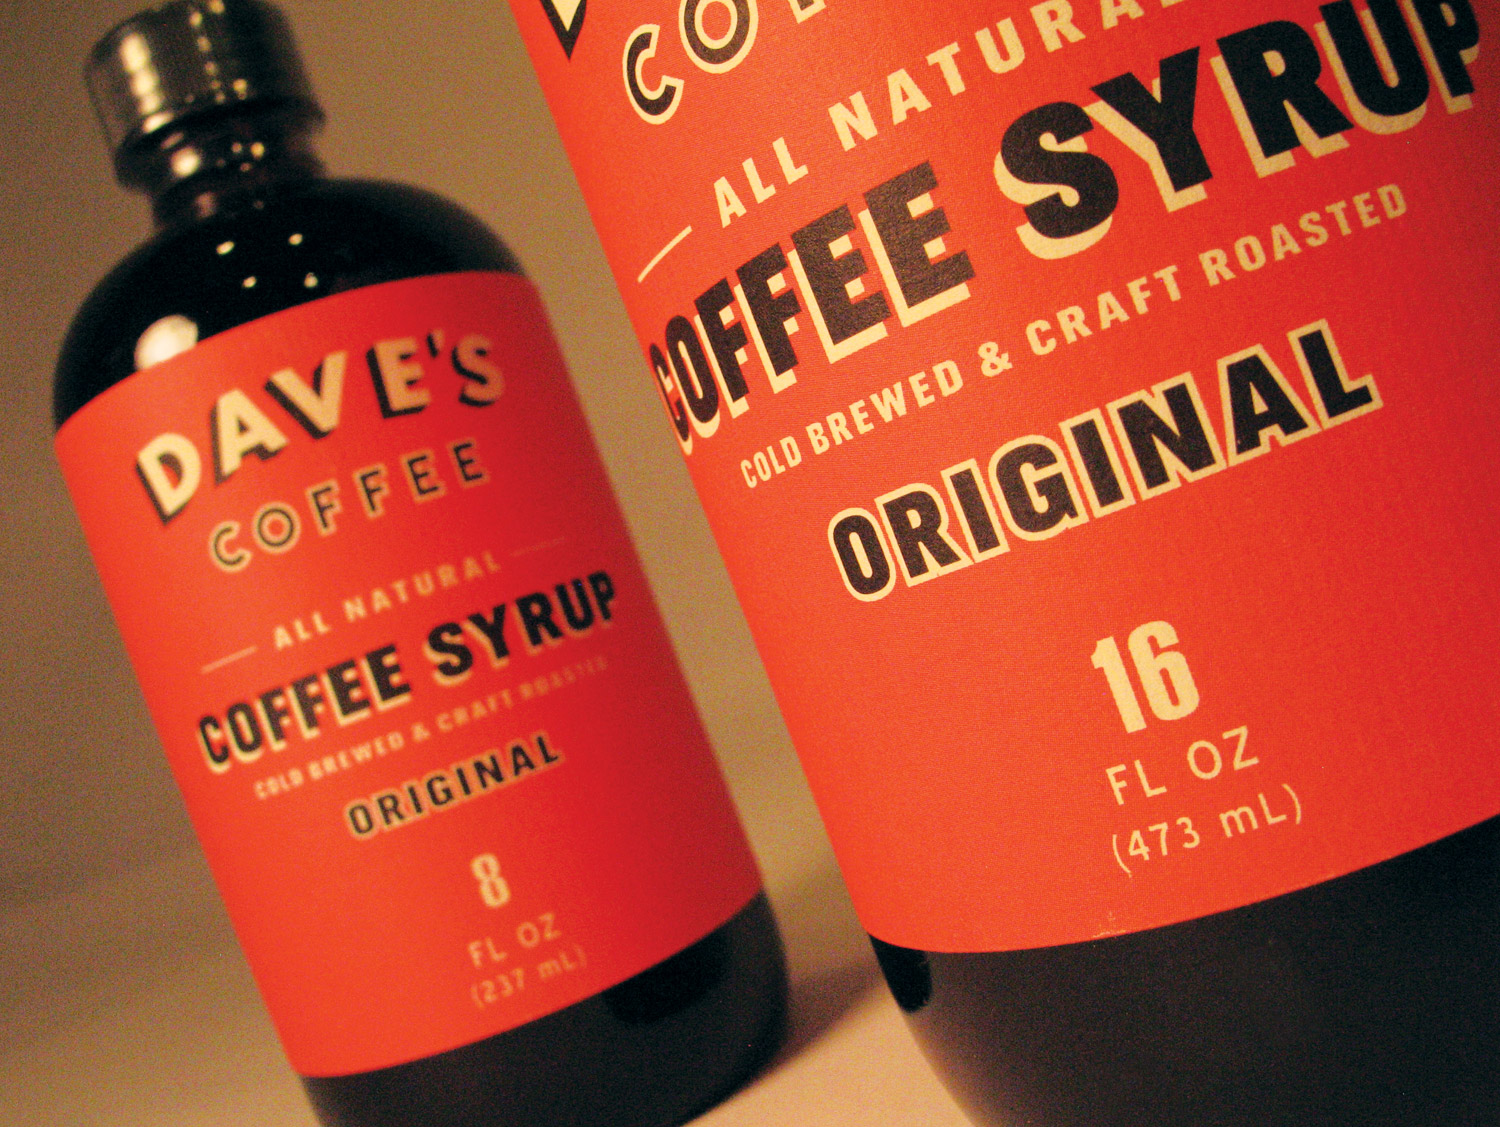 Daves-Coffee-Syrup-Packaging-016.jpg